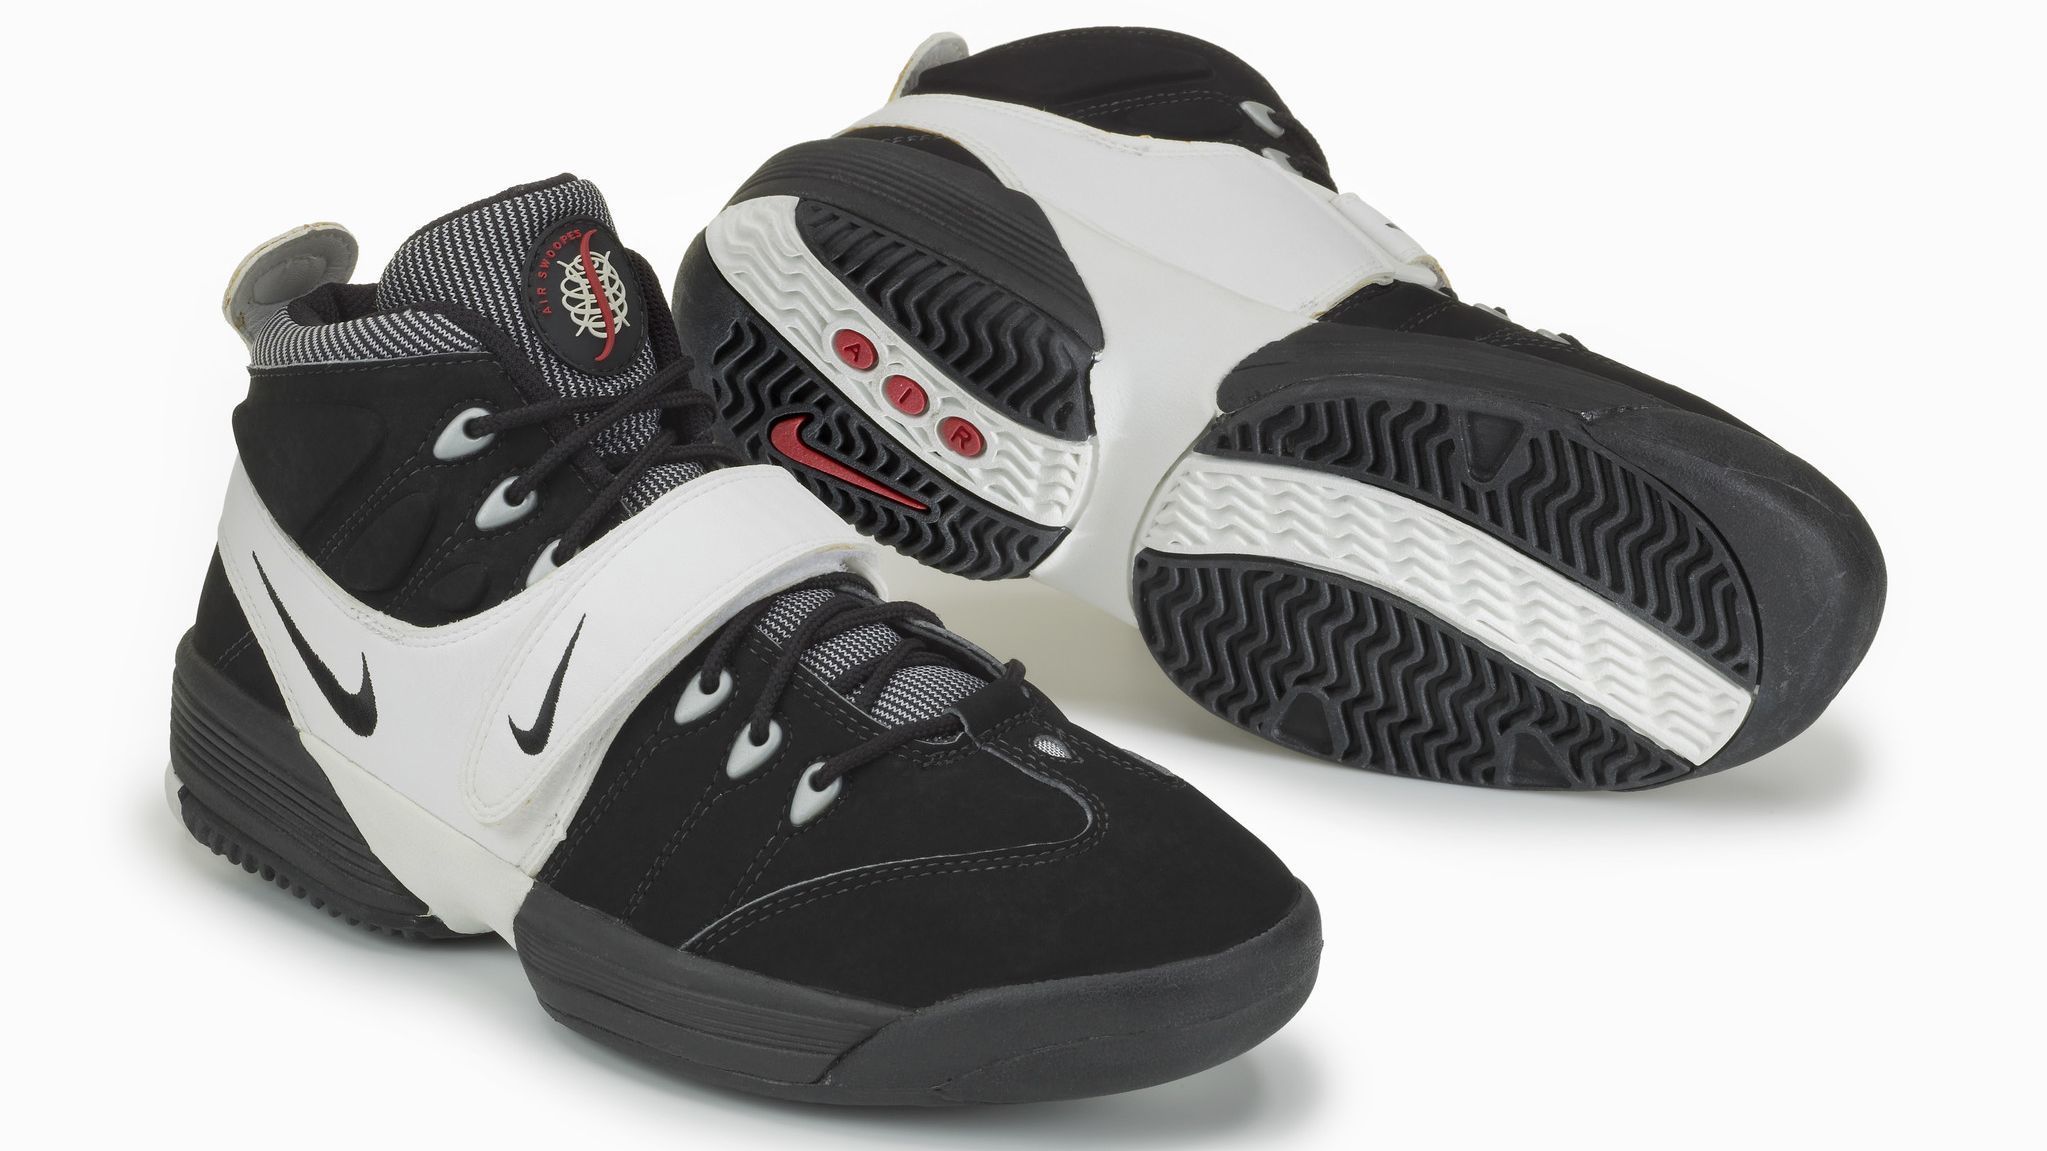 nike basketball shoes 1995